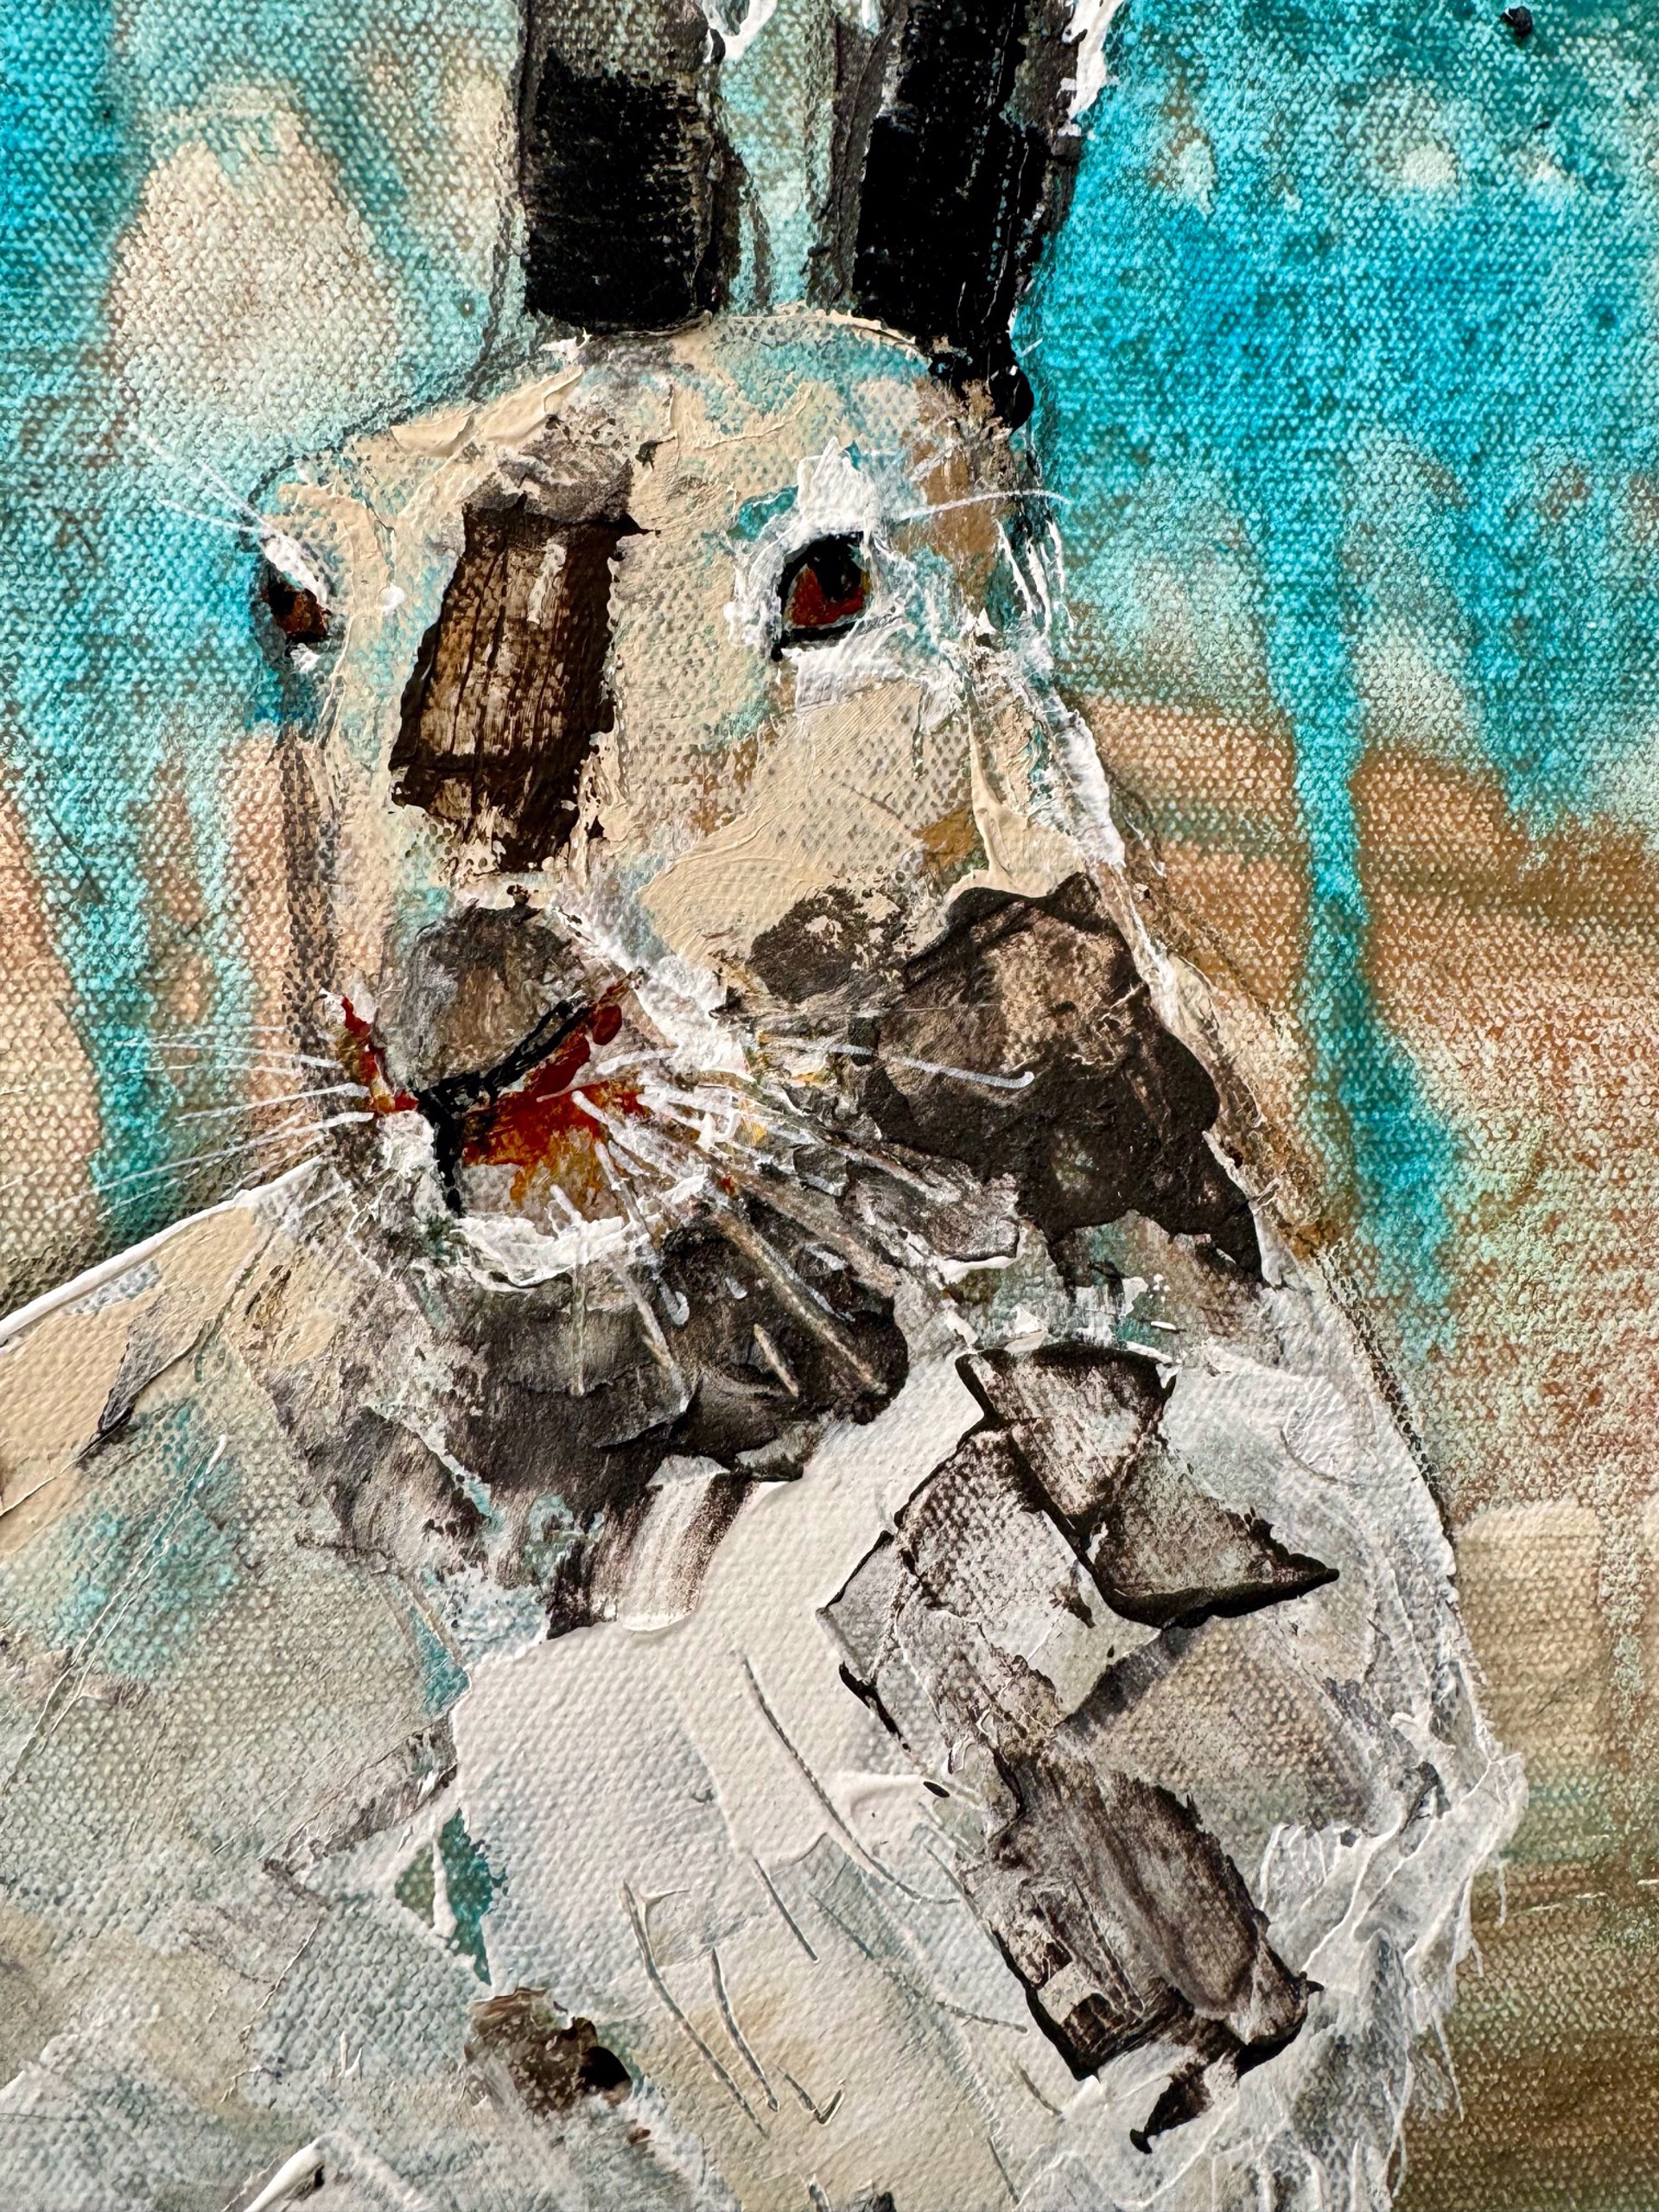 Winter Hare No. 2 by John Baran